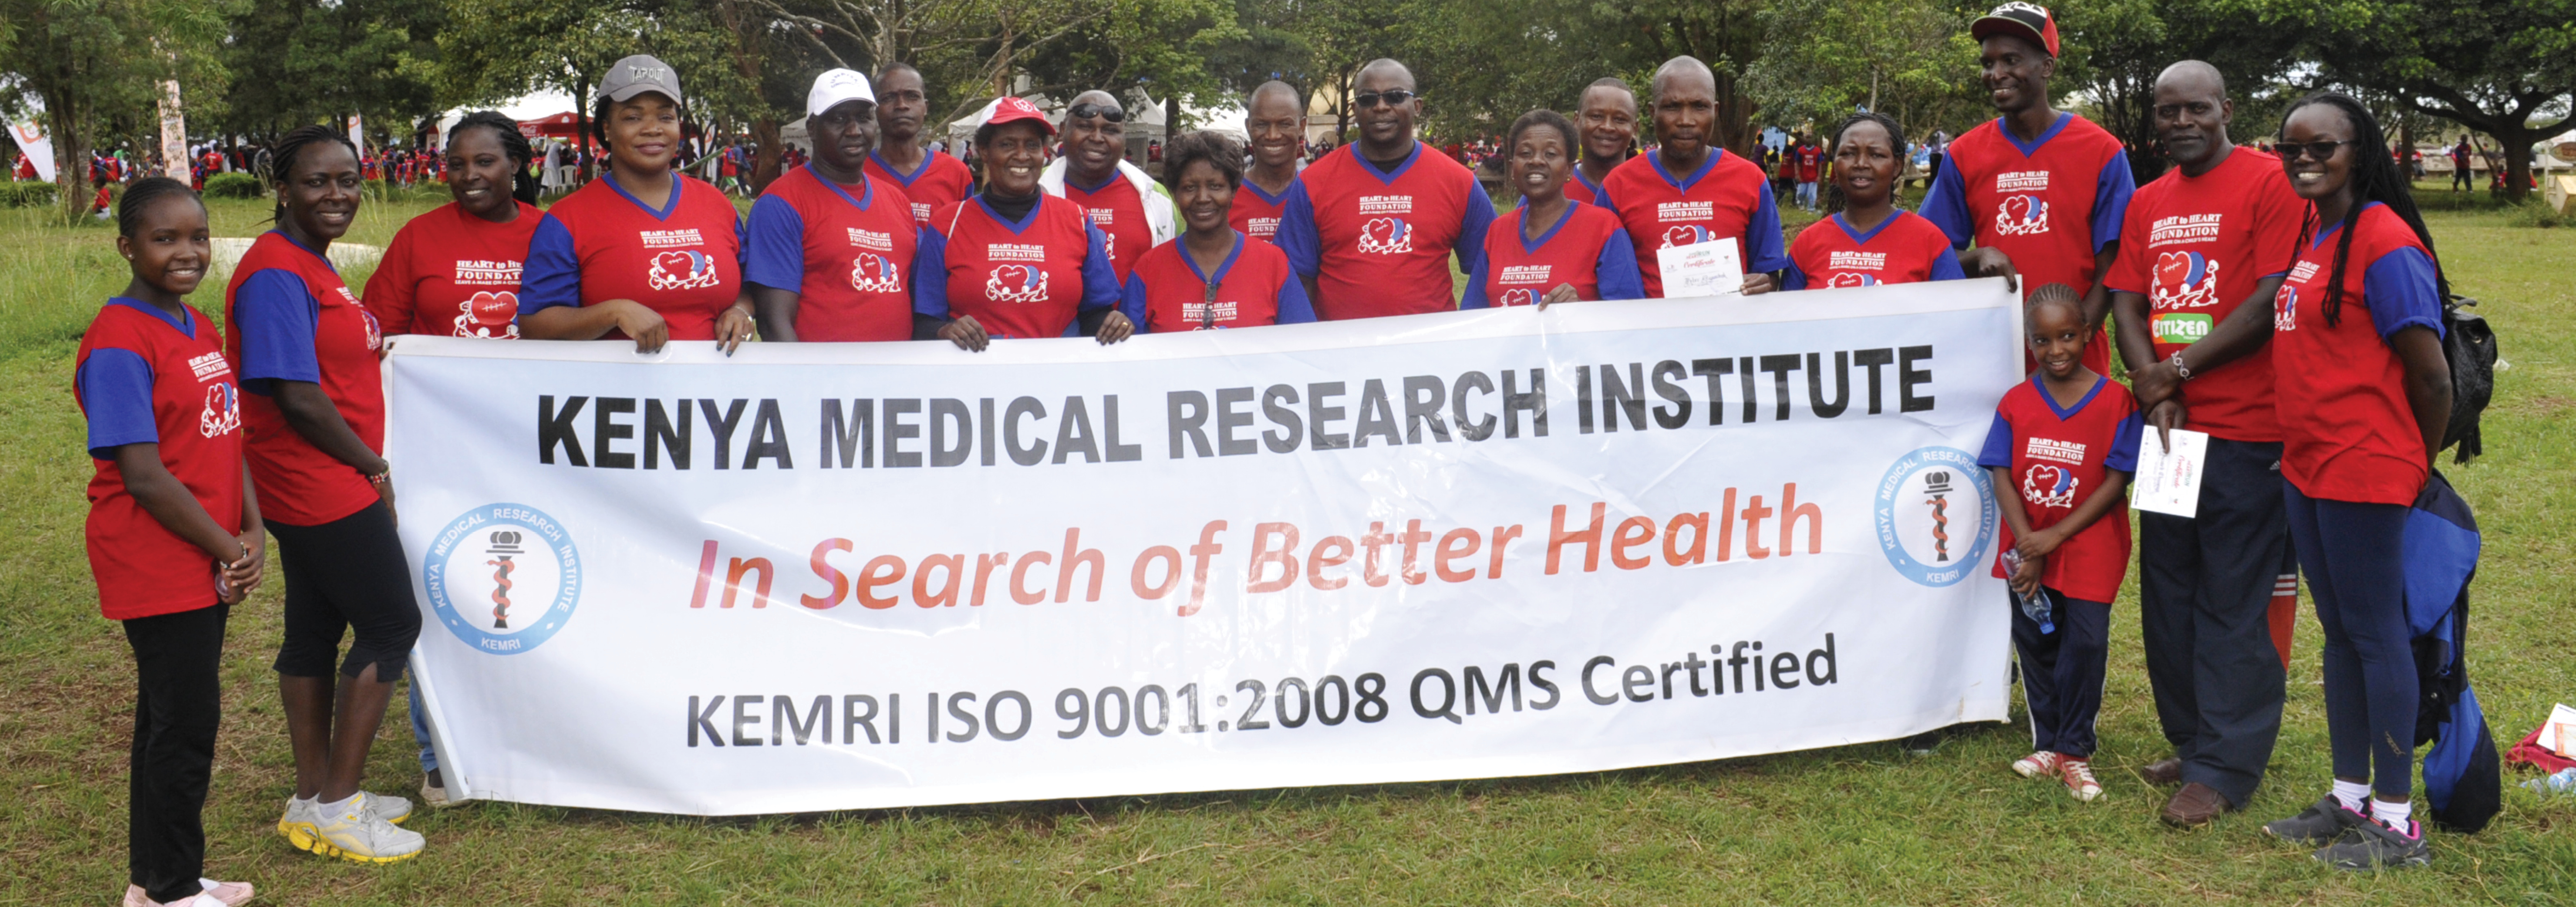 kenya medical research institute internships